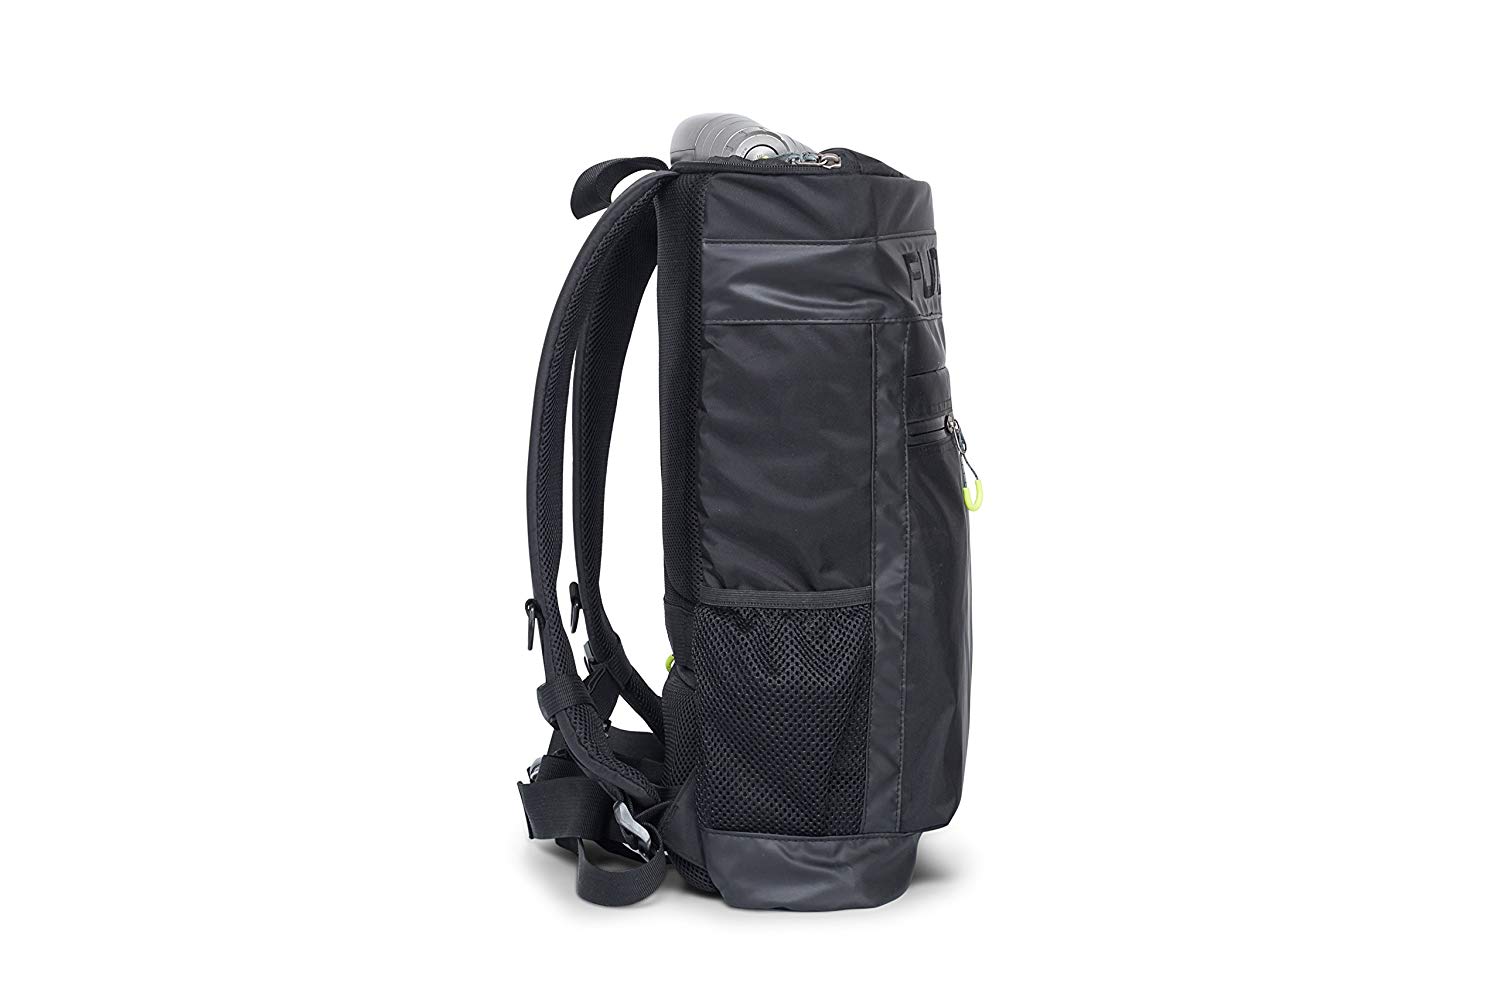 EZ FunShell Backpack Umbrella UV RAIN PROTECTIONS Lightweight Fan